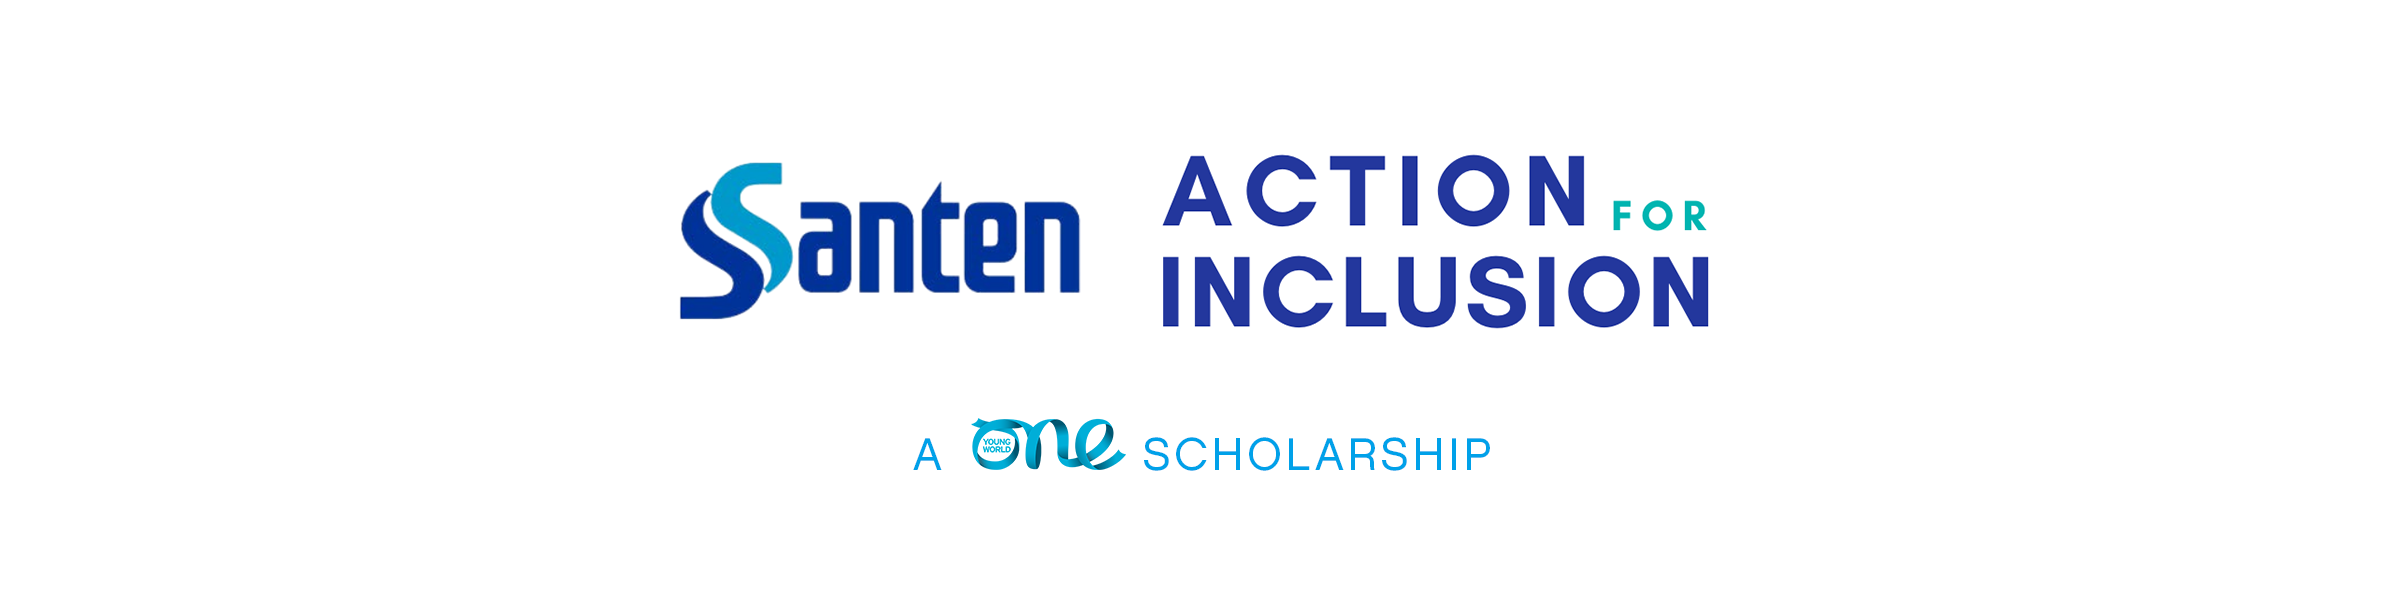 Santen Action For Inclusion Scholarship